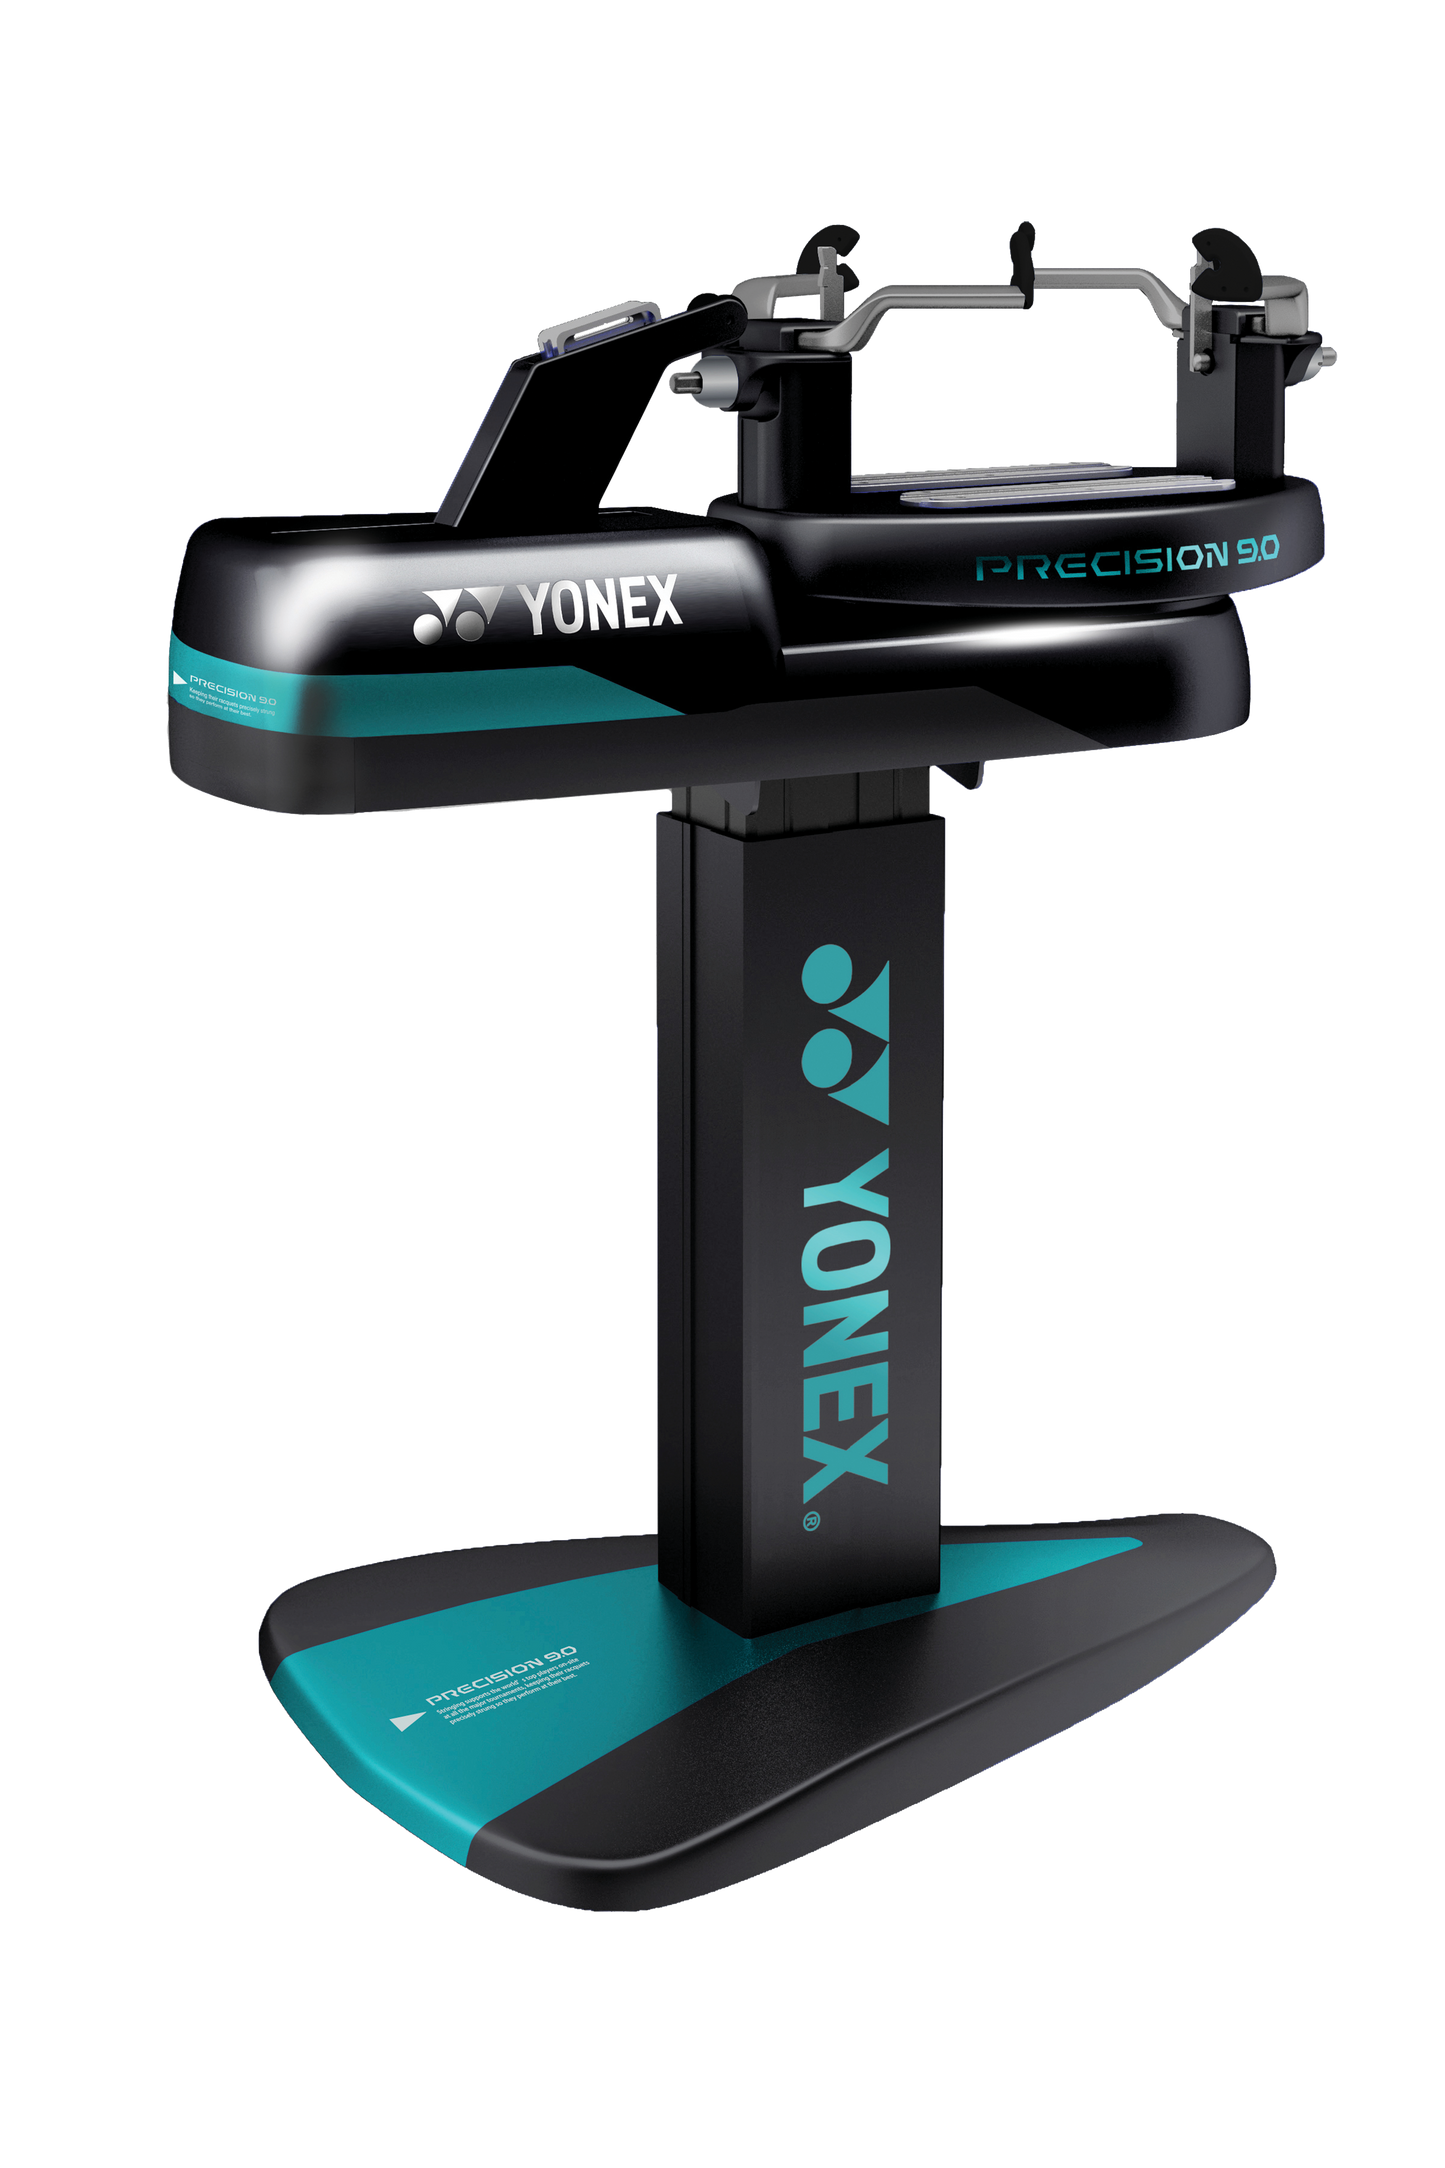 YONEX PRECISION 9.0 Stringing Machine - Max Sports